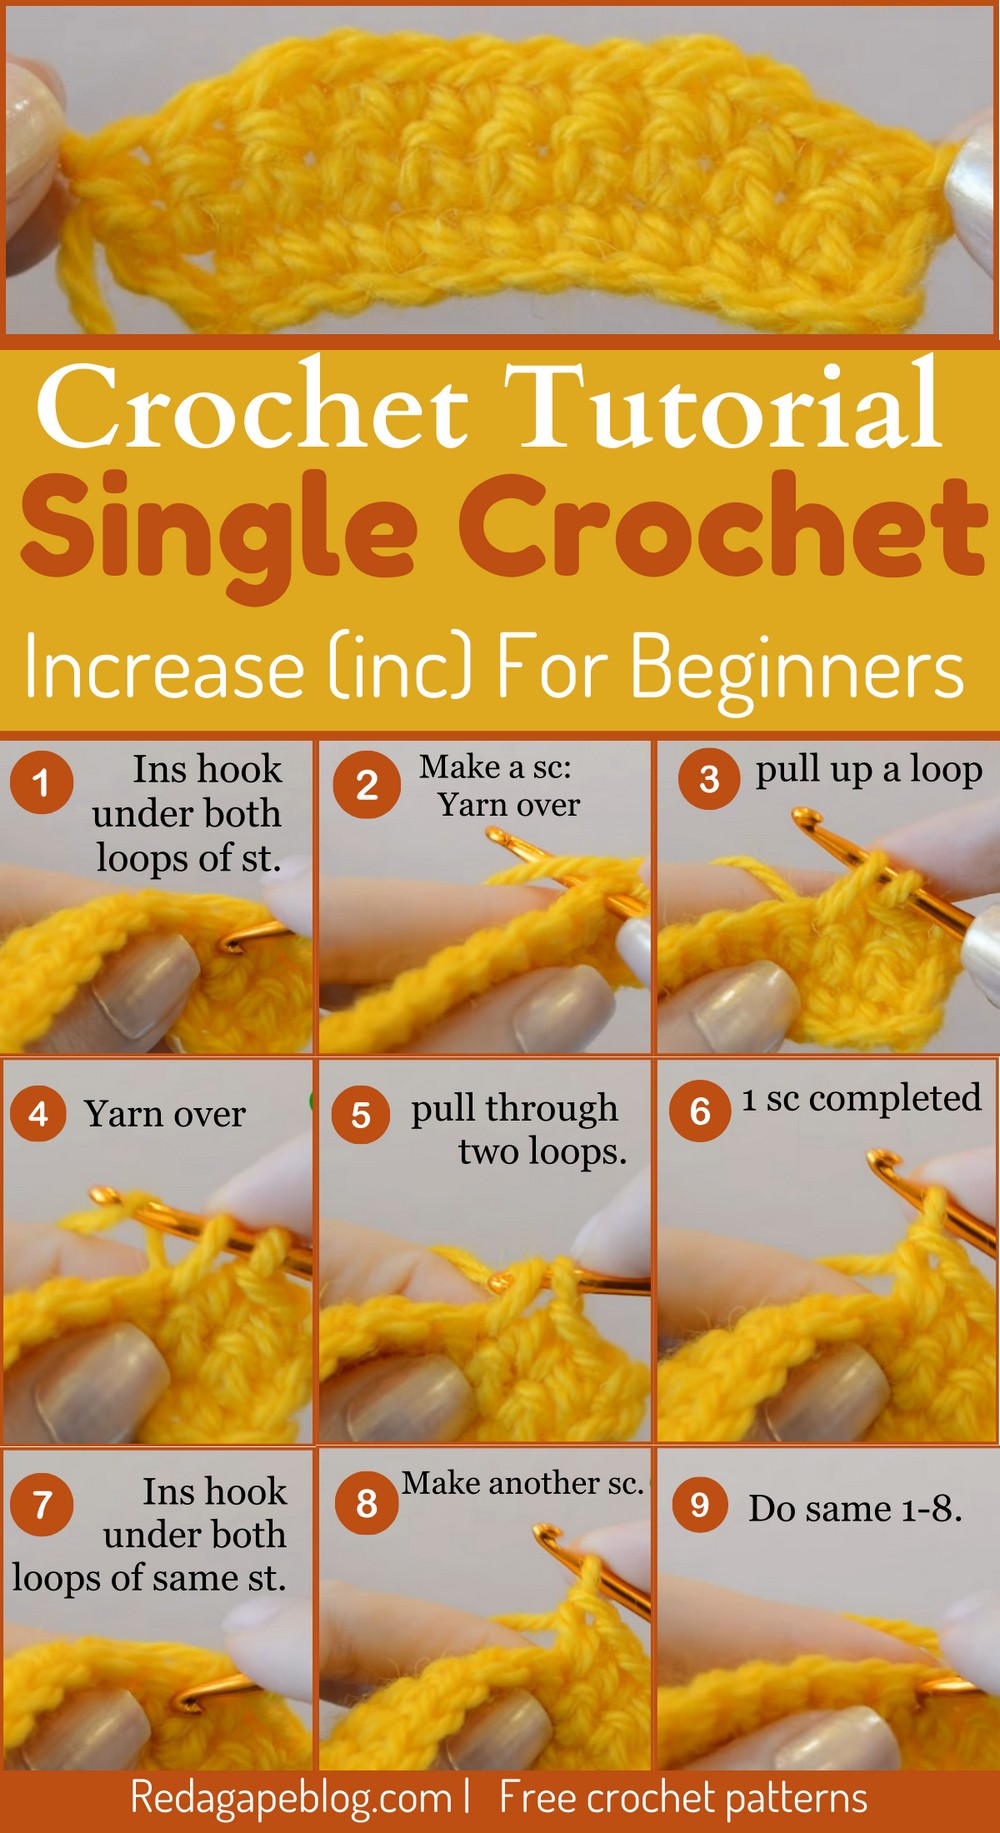 Single crochet increase (inc) tutorial